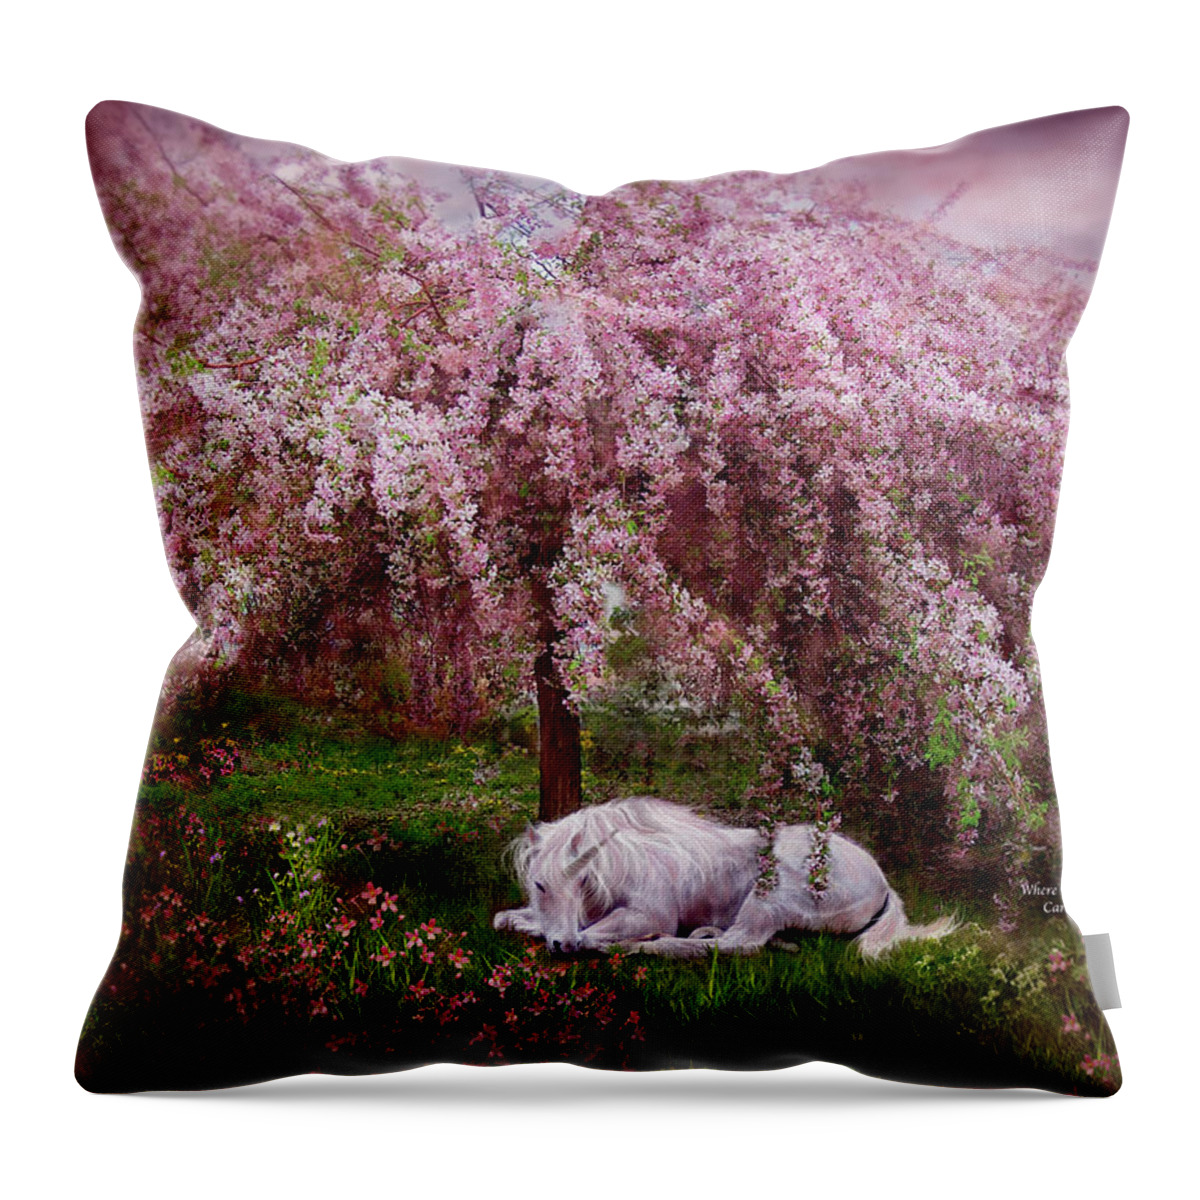 Unicorn Throw Pillow featuring the mixed media Where Unicorn's Dream by Carol Cavalaris